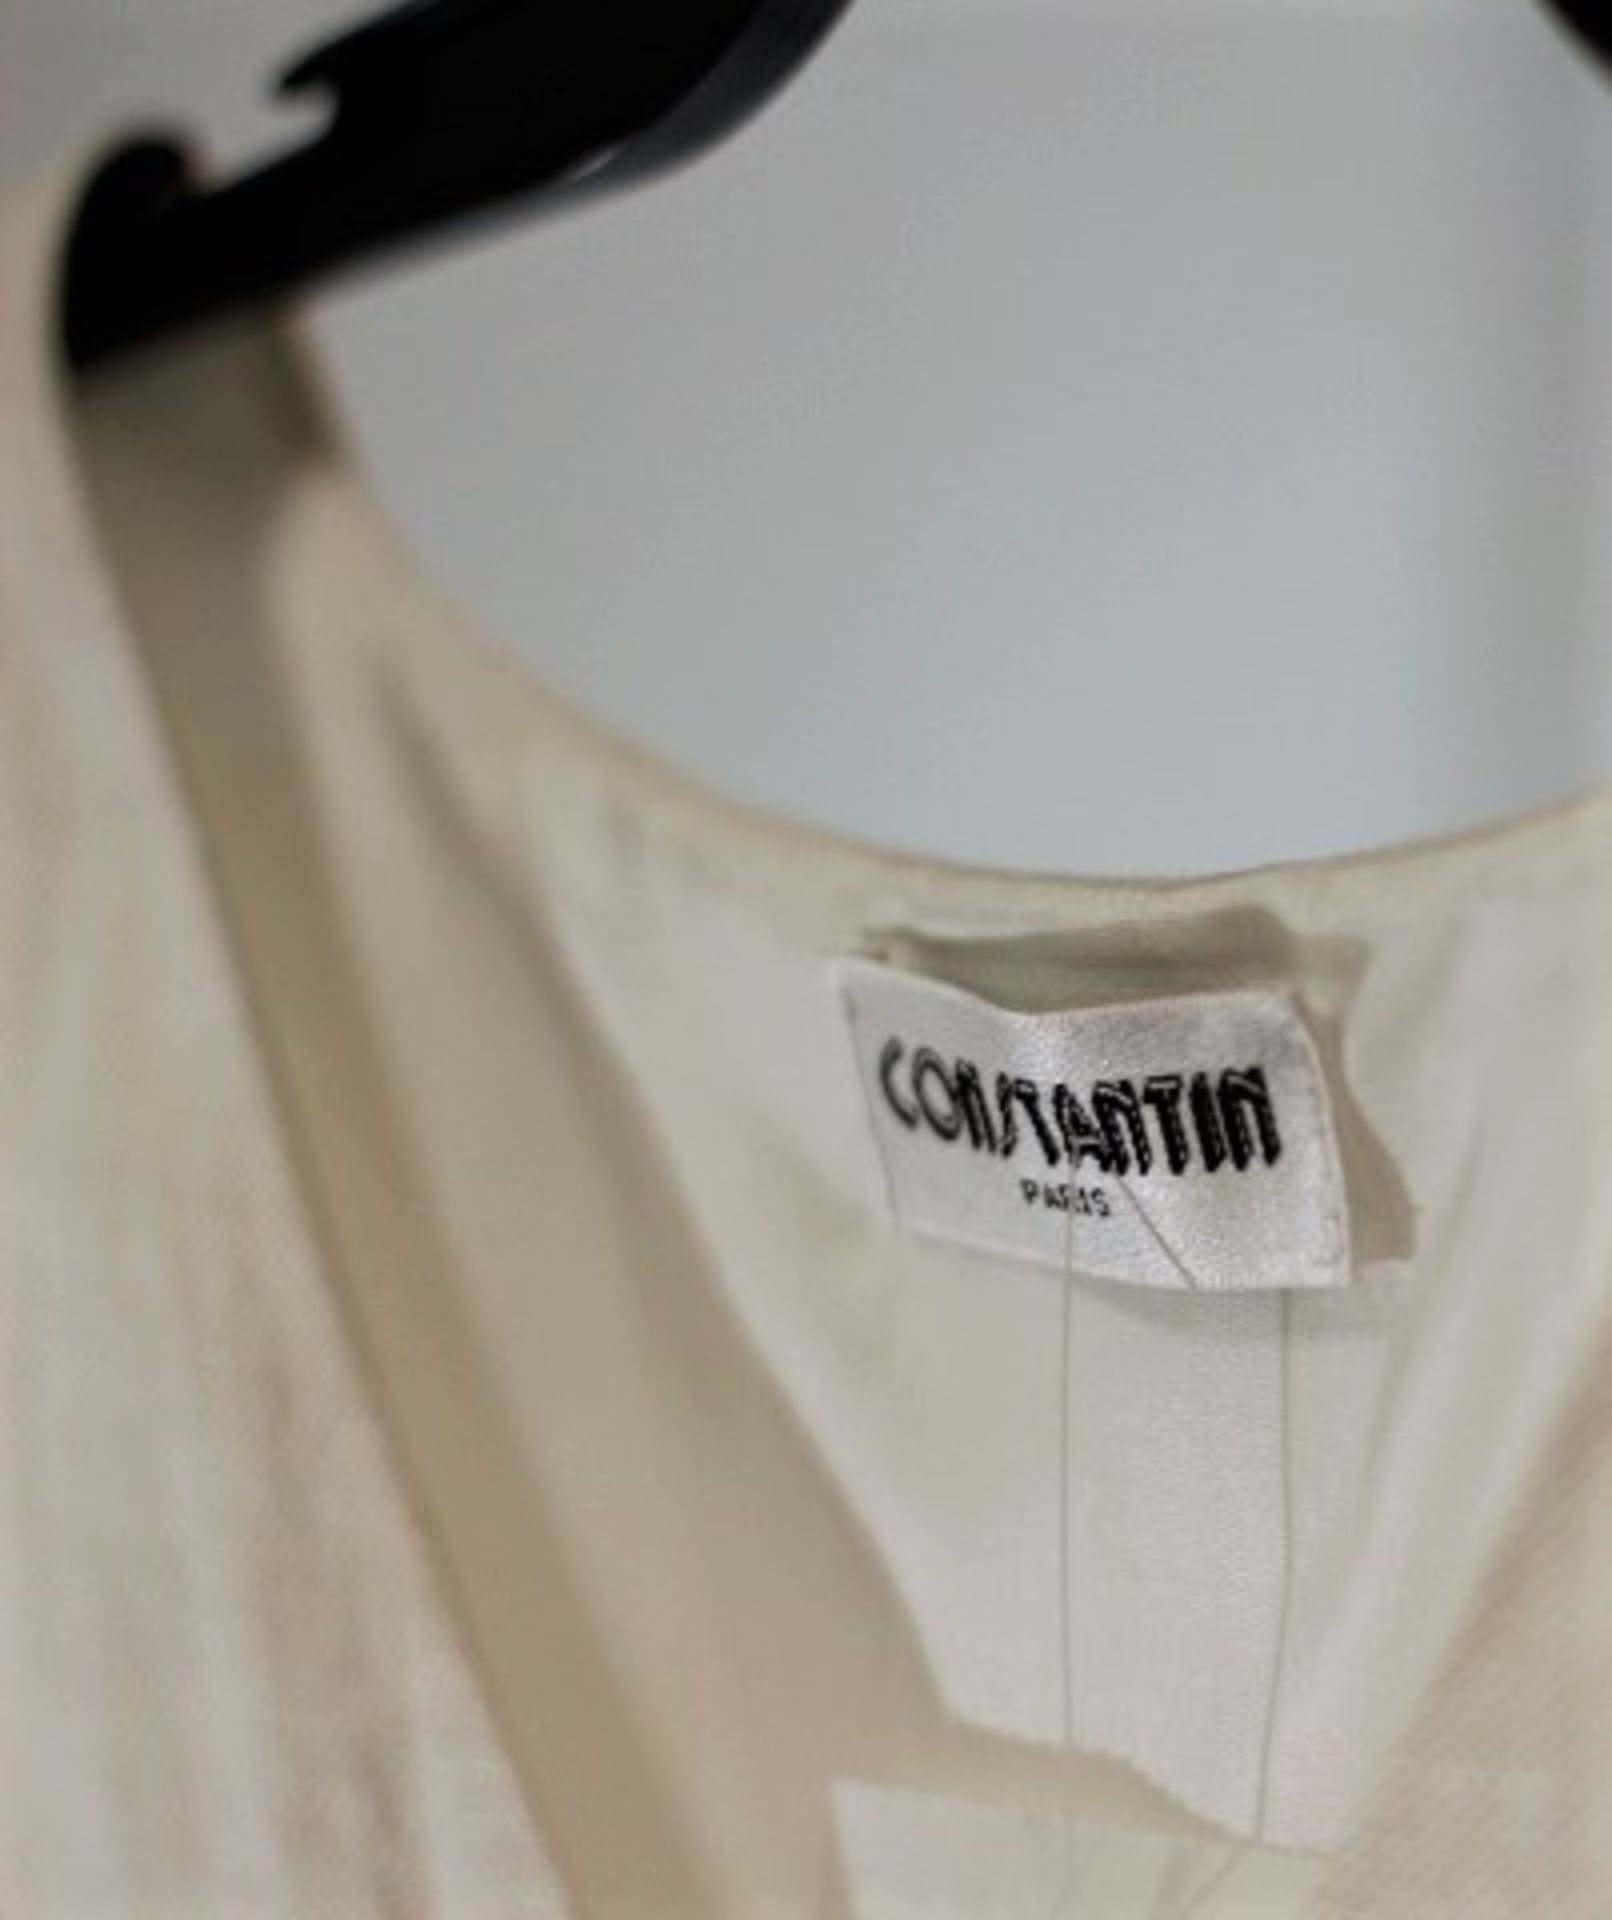 1 x Constantin Paris White Top - Size: 24 - Material: Acetate, Acrylic, Cotton, Fibre, Polyester, - Image 4 of 8